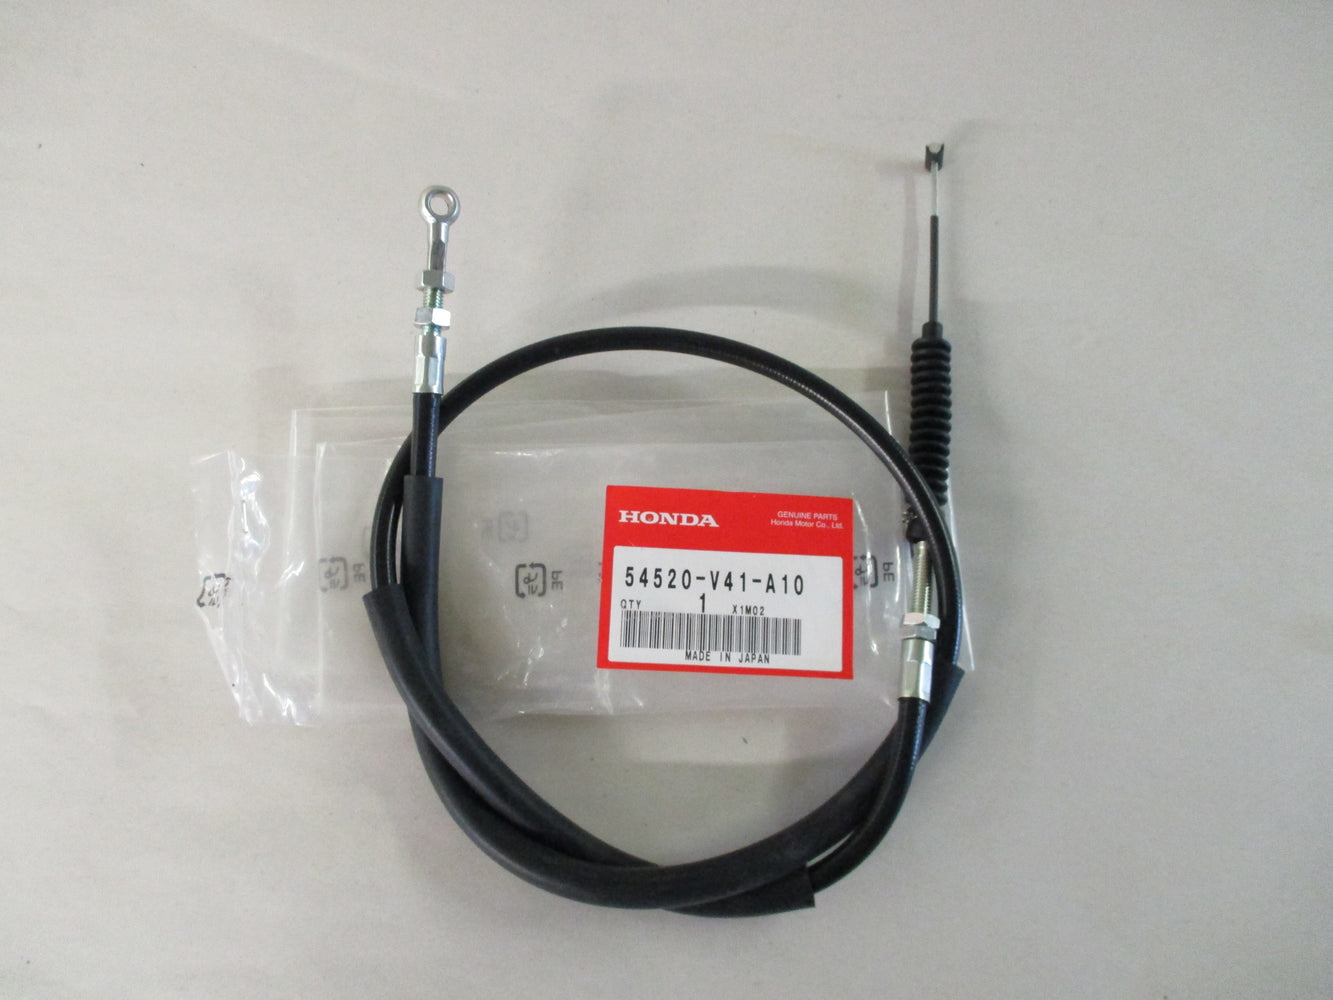 Genuine Honda 54520-V41-A10 Auger Clutch Cable Fits HS928K1